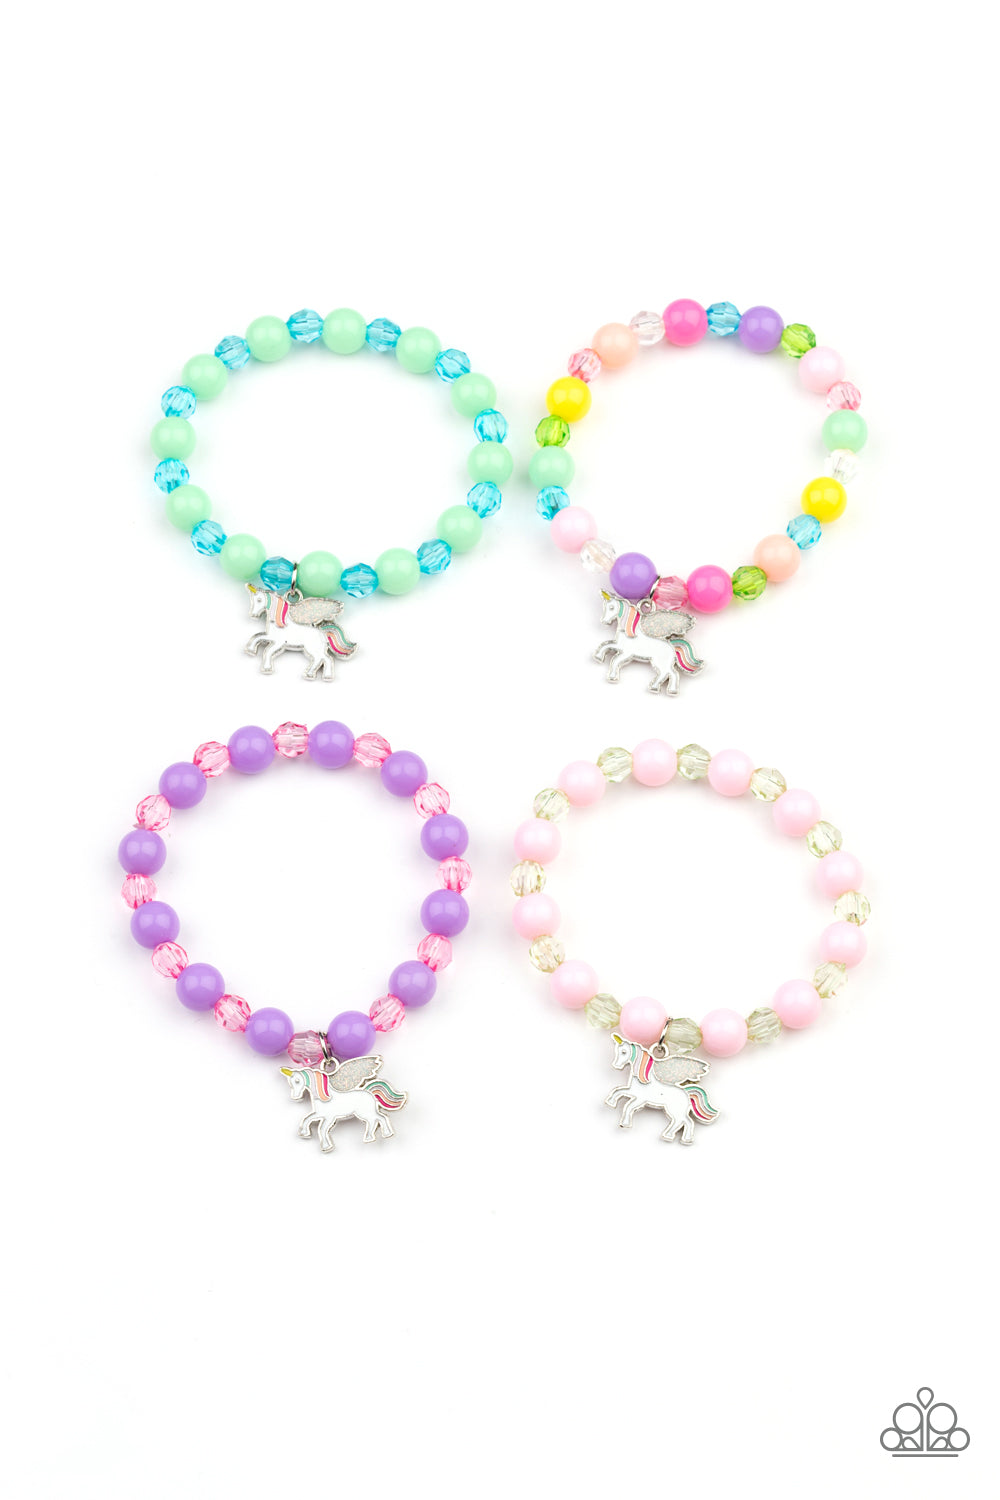 Paparazzi Starlet Shimmer Bracelets - Unicorn Charms - Pack of 10